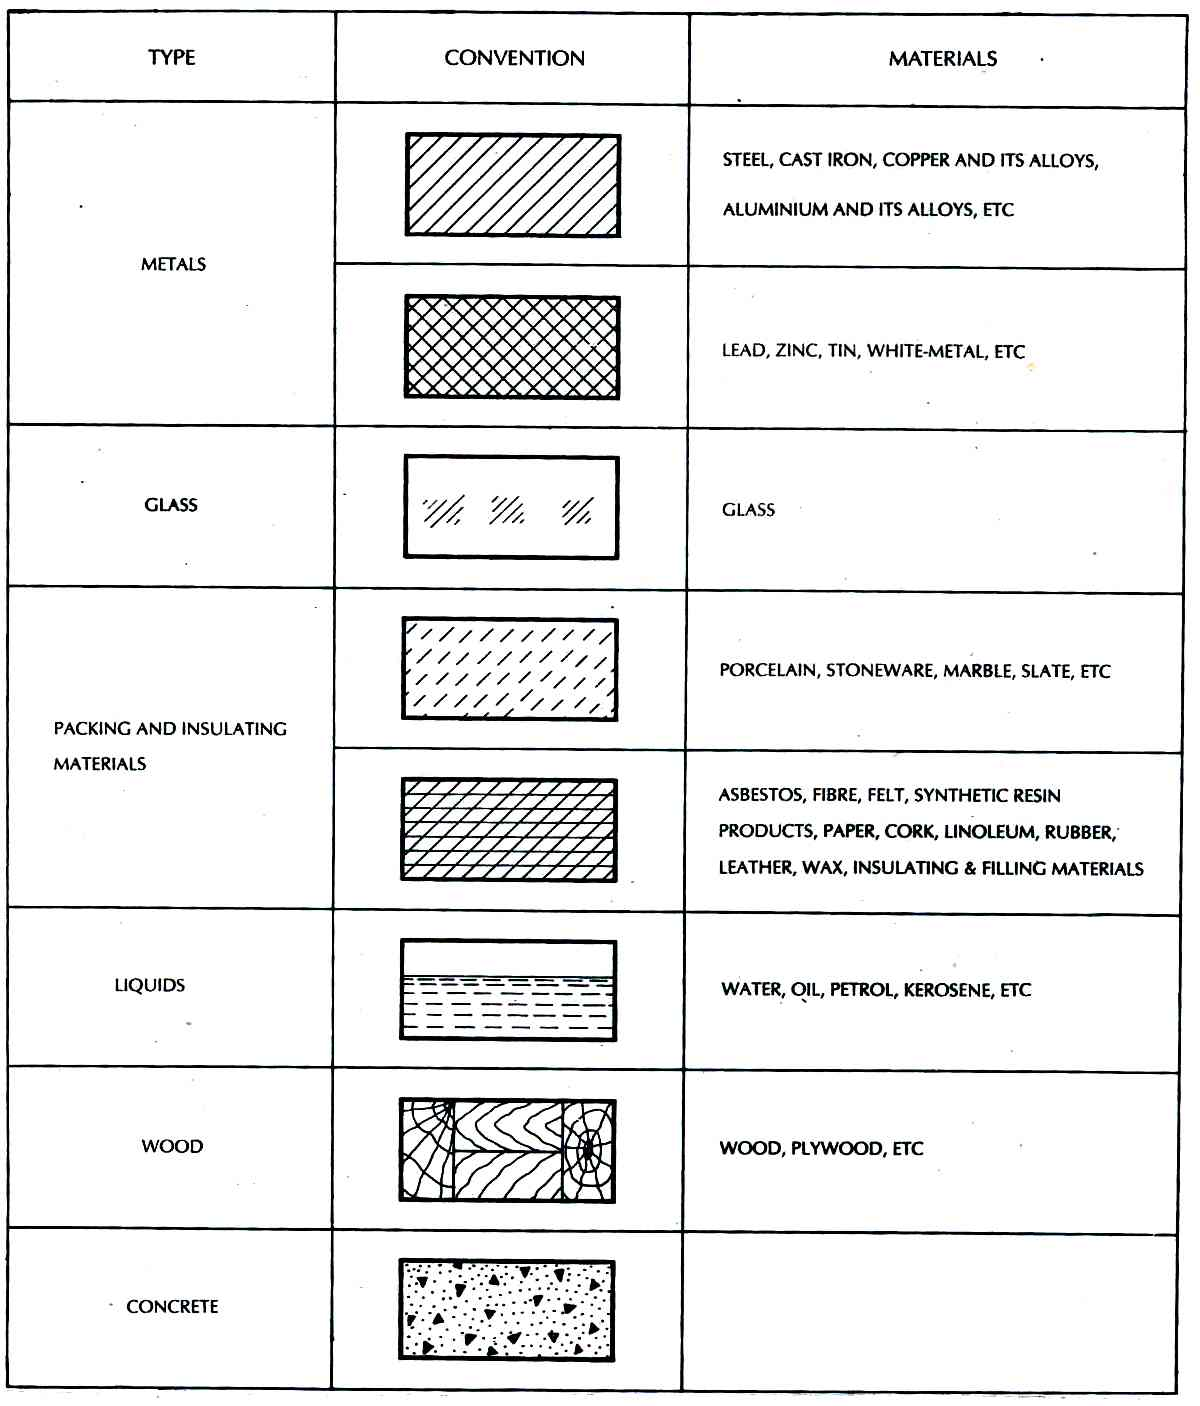 conventional representation of materials